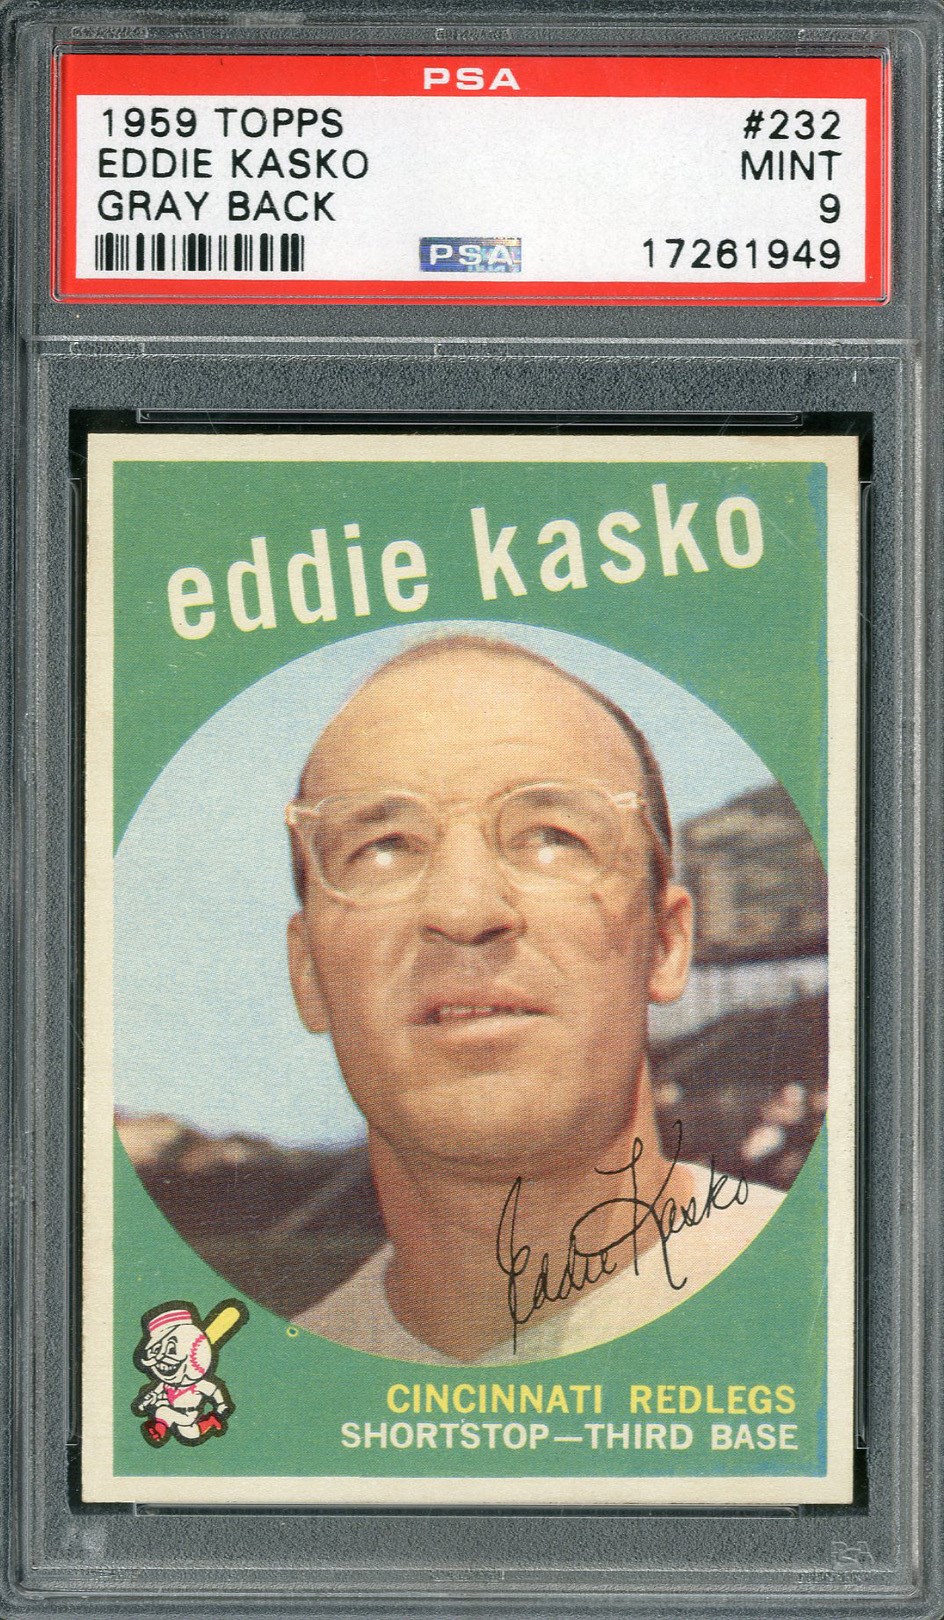 Baseball and Trading Cards - 1959 Topps #232 Eddie Kasko Gray Back PSA MINT 9 (Pop 2)